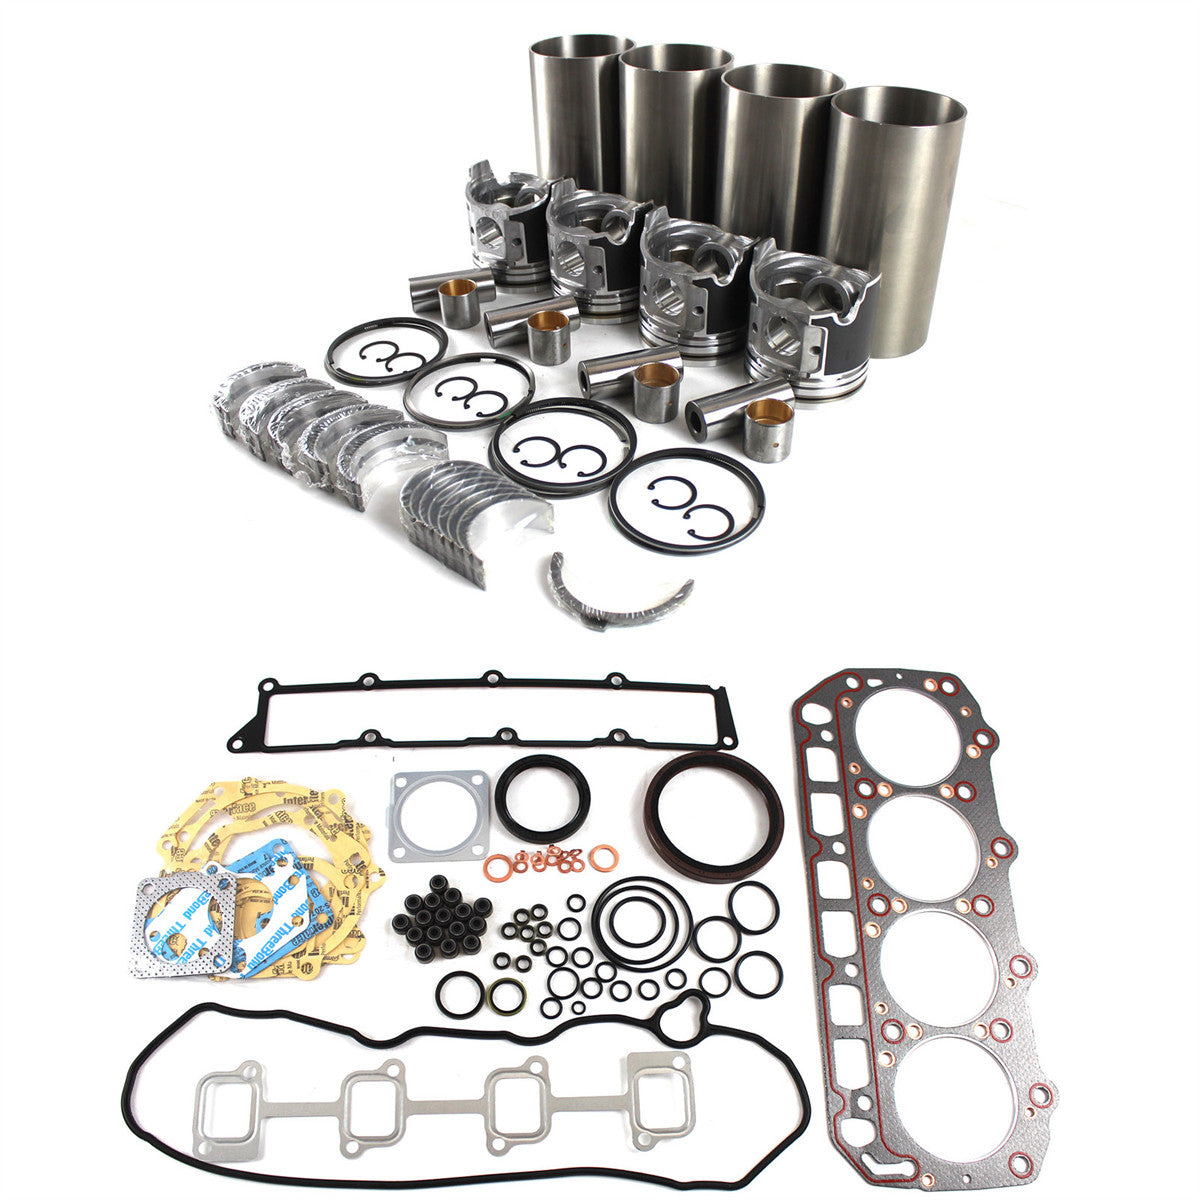 4TNV94 4TNV94L 4TNV94LE Engine Rebuild Kit for Hyundai R55-7 R60-7 Excavator - Sinocmp